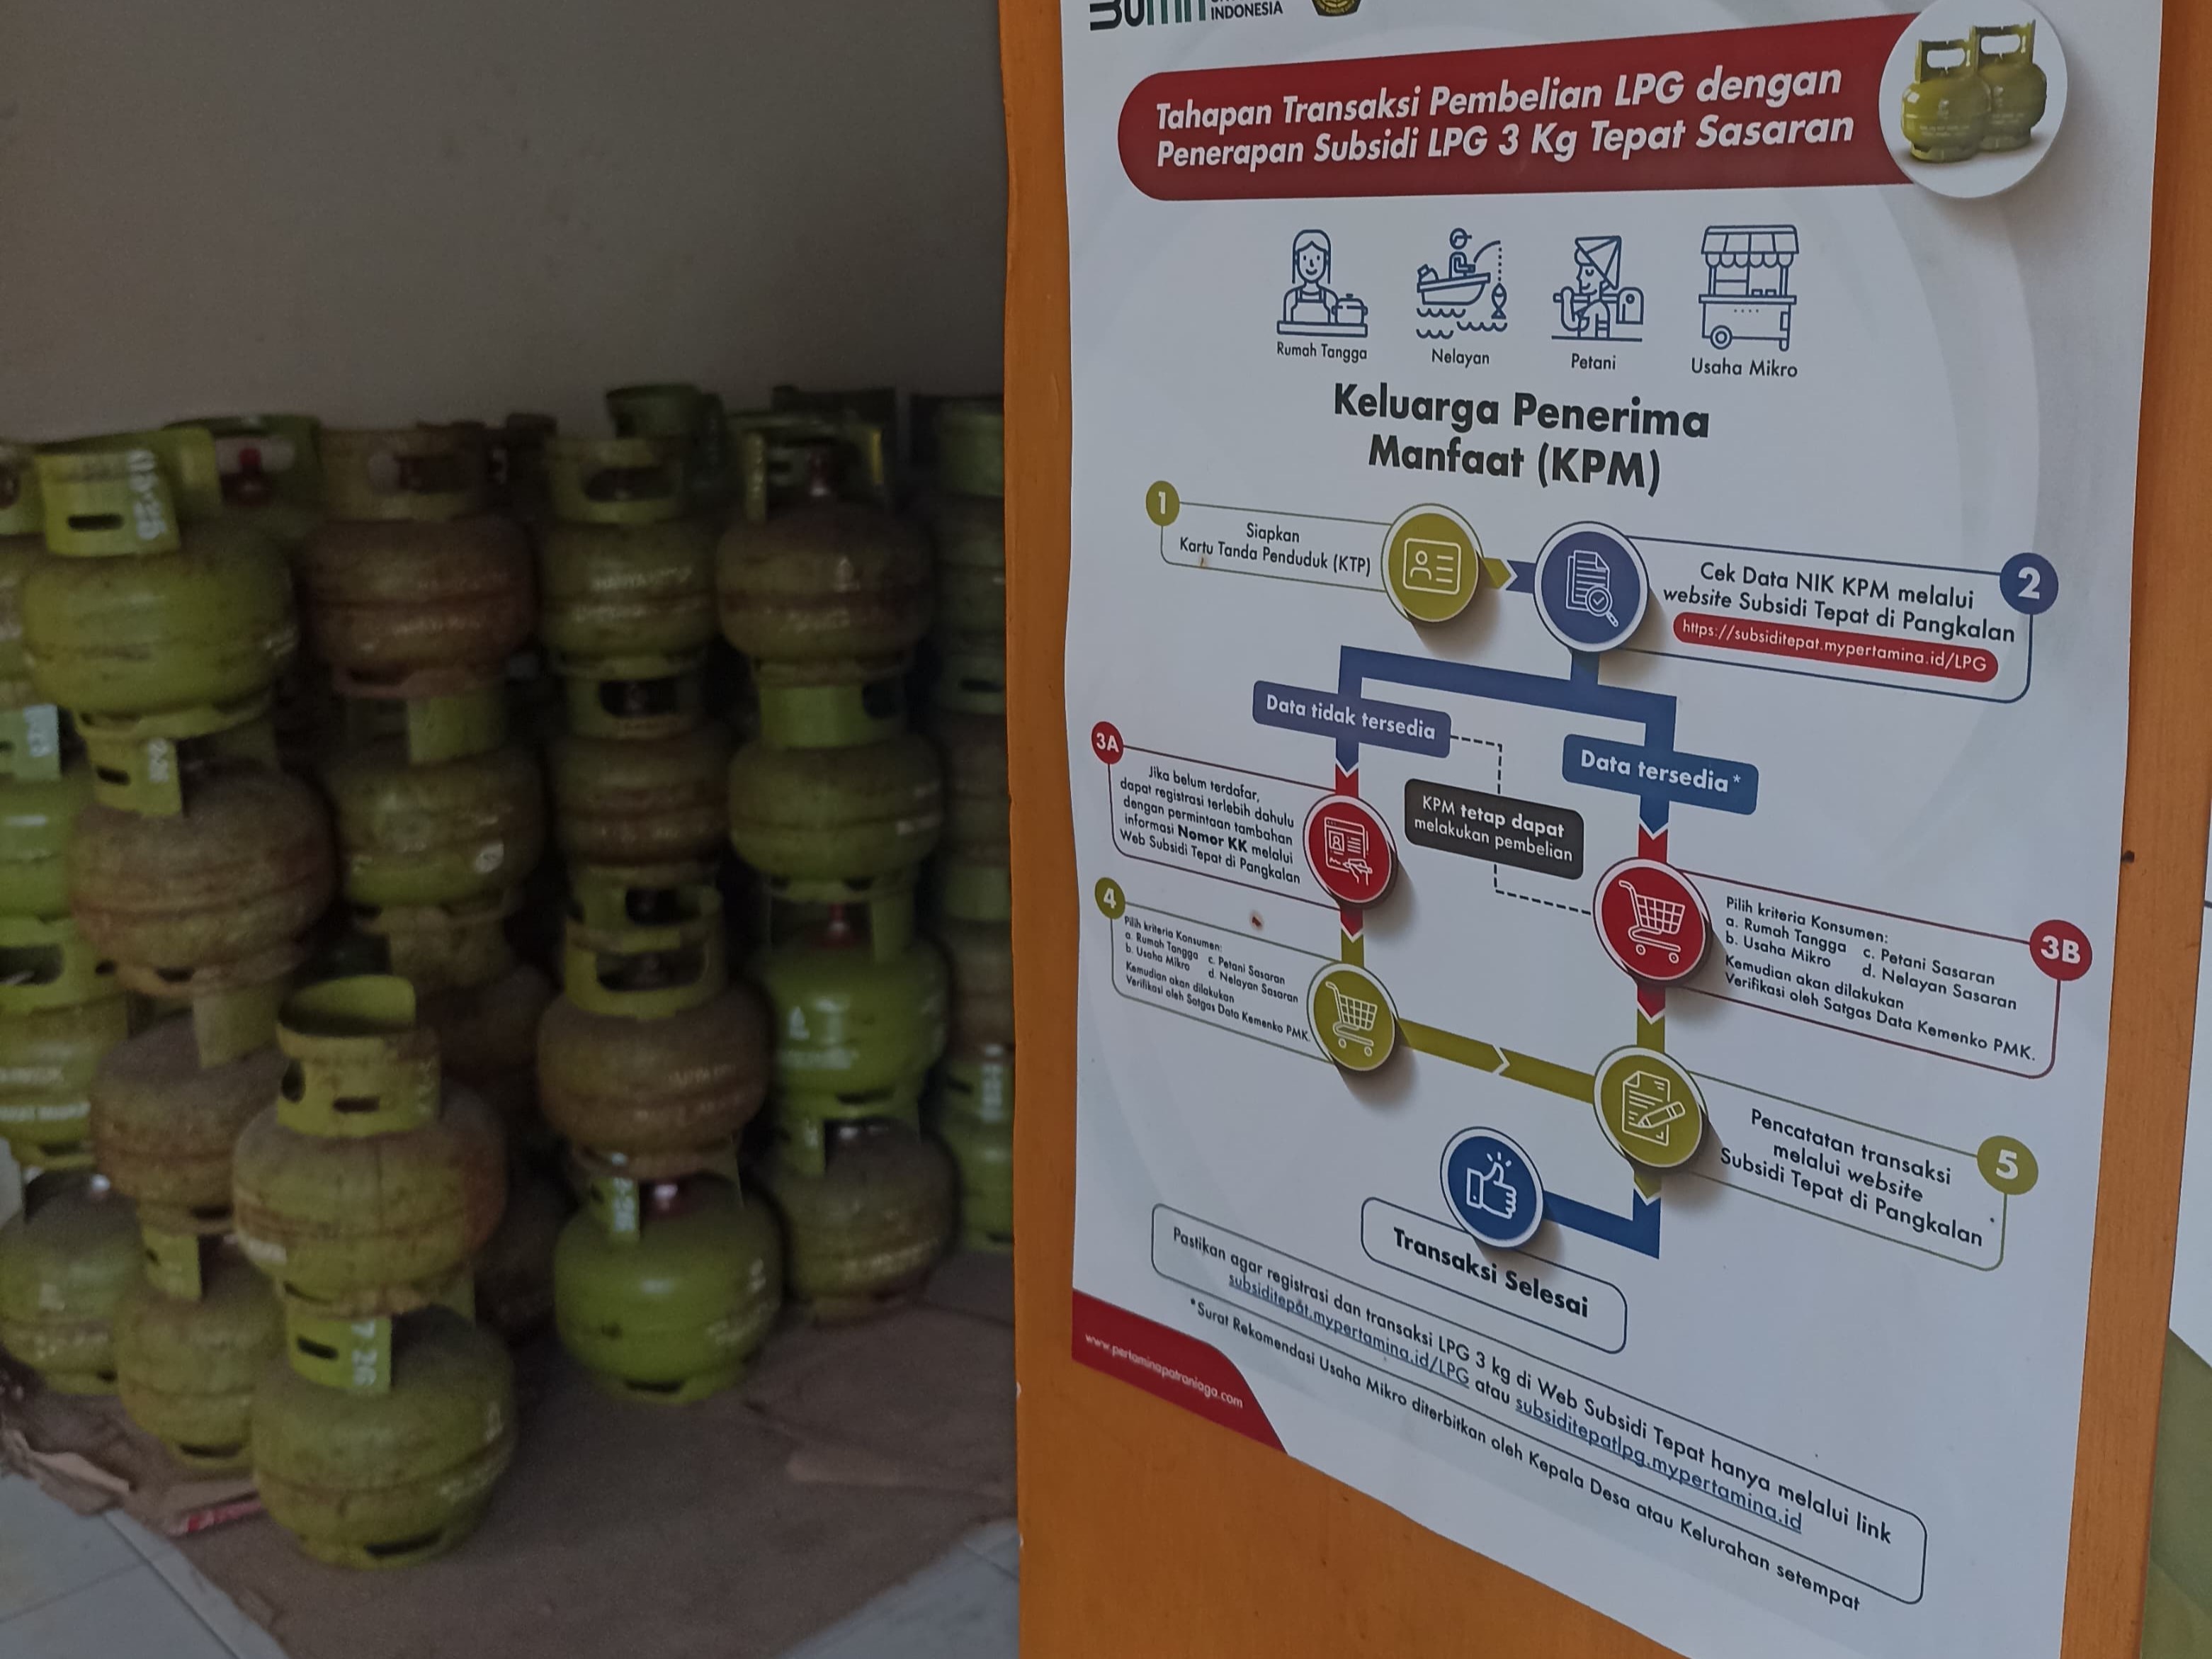 Pembelian LPG Bersubsidi di Kota Yogya Mulai Wajib KTP